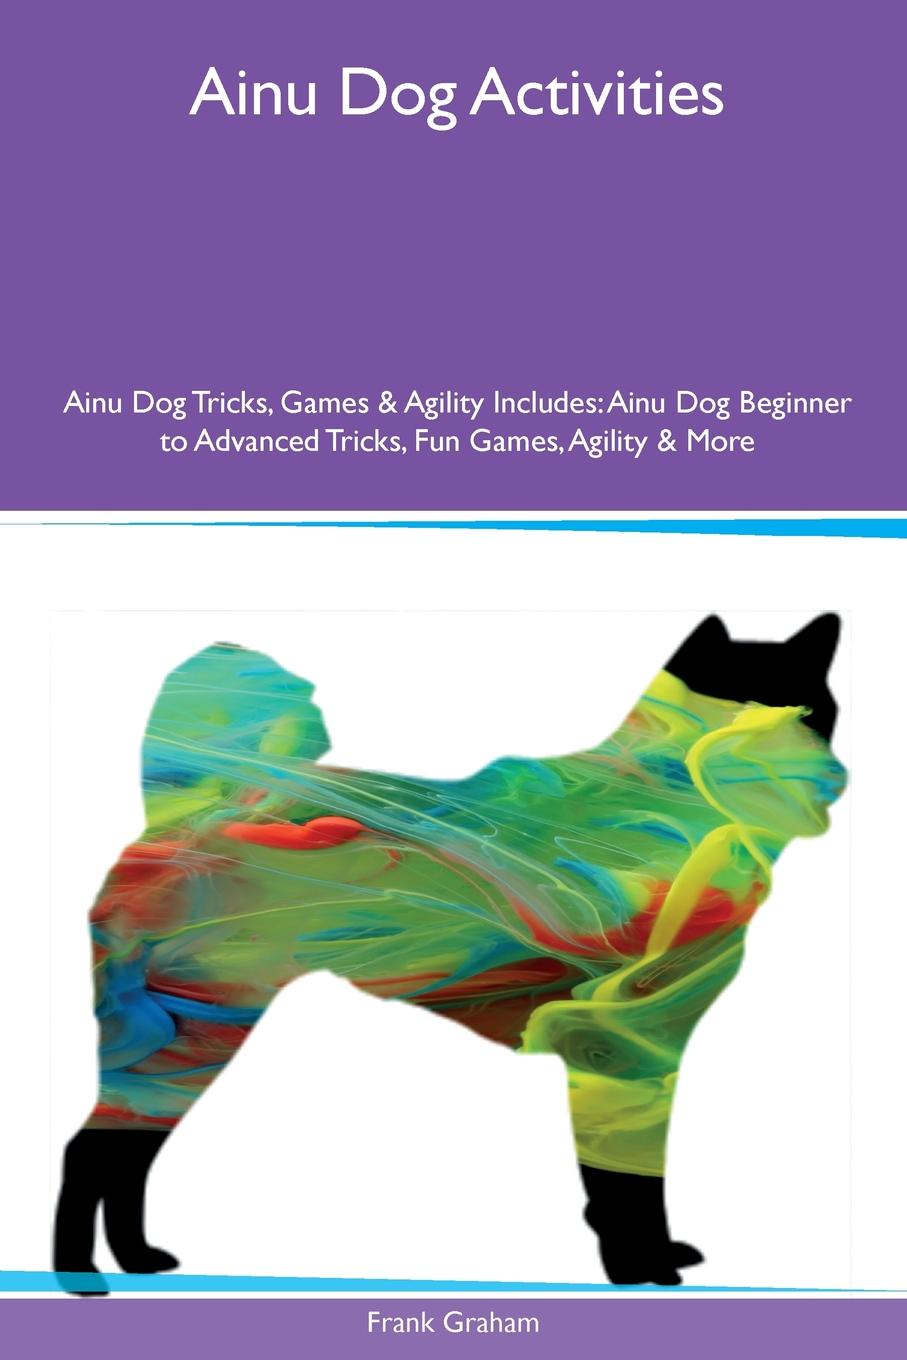 Ainu Dog Activities Ainu Dog Tricks, Games & Agility Includes. Ainu Dog Beginner to Advanced Tricks, Fun Games, Agility & More